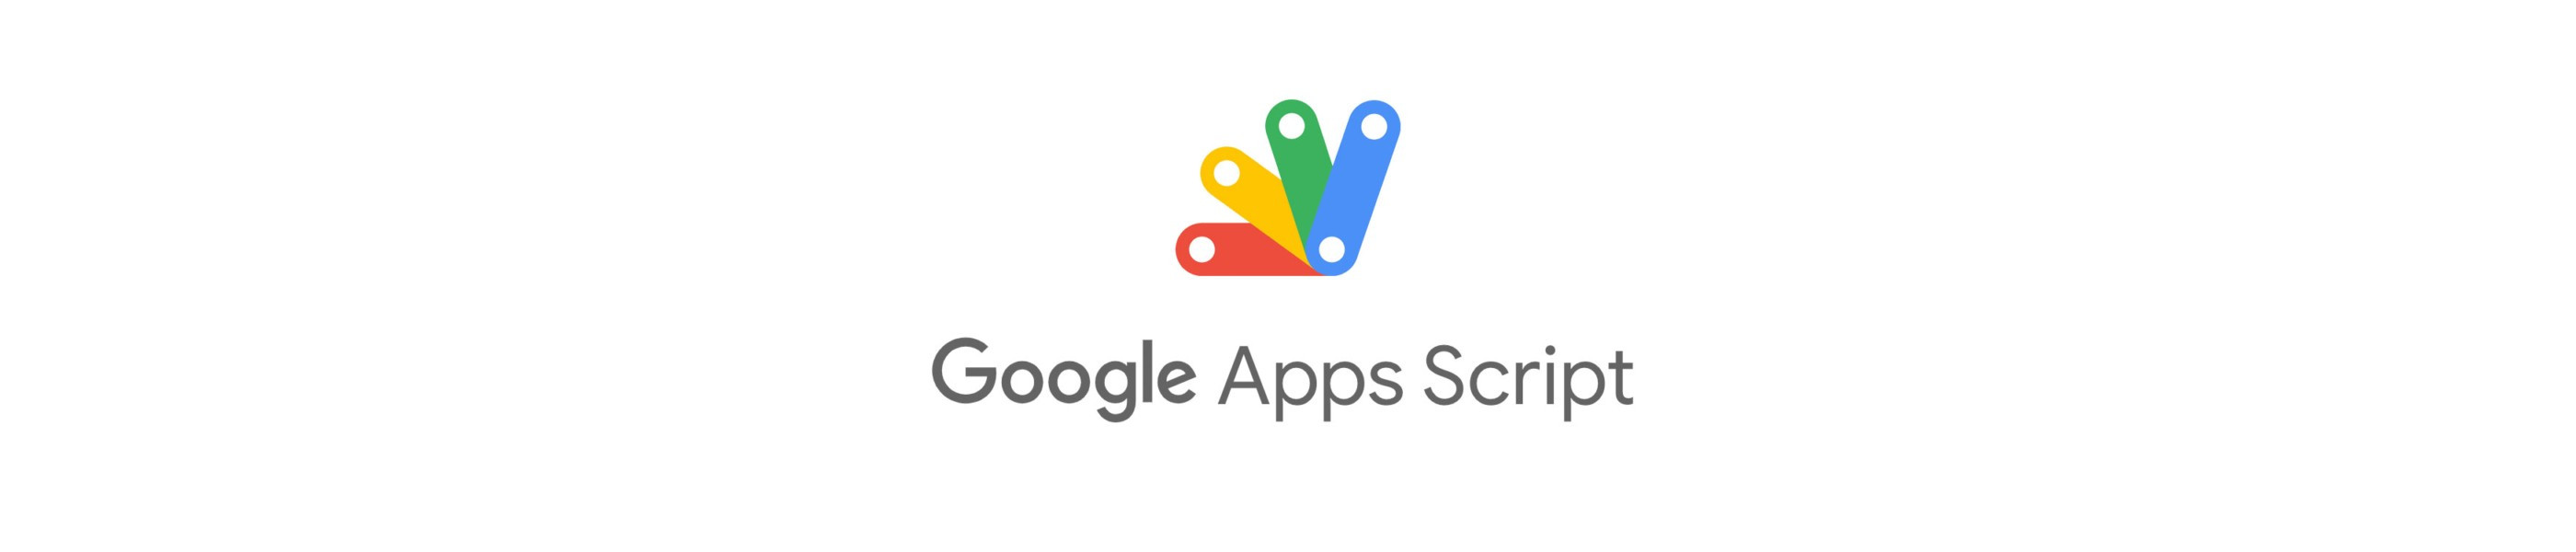 Google App Script